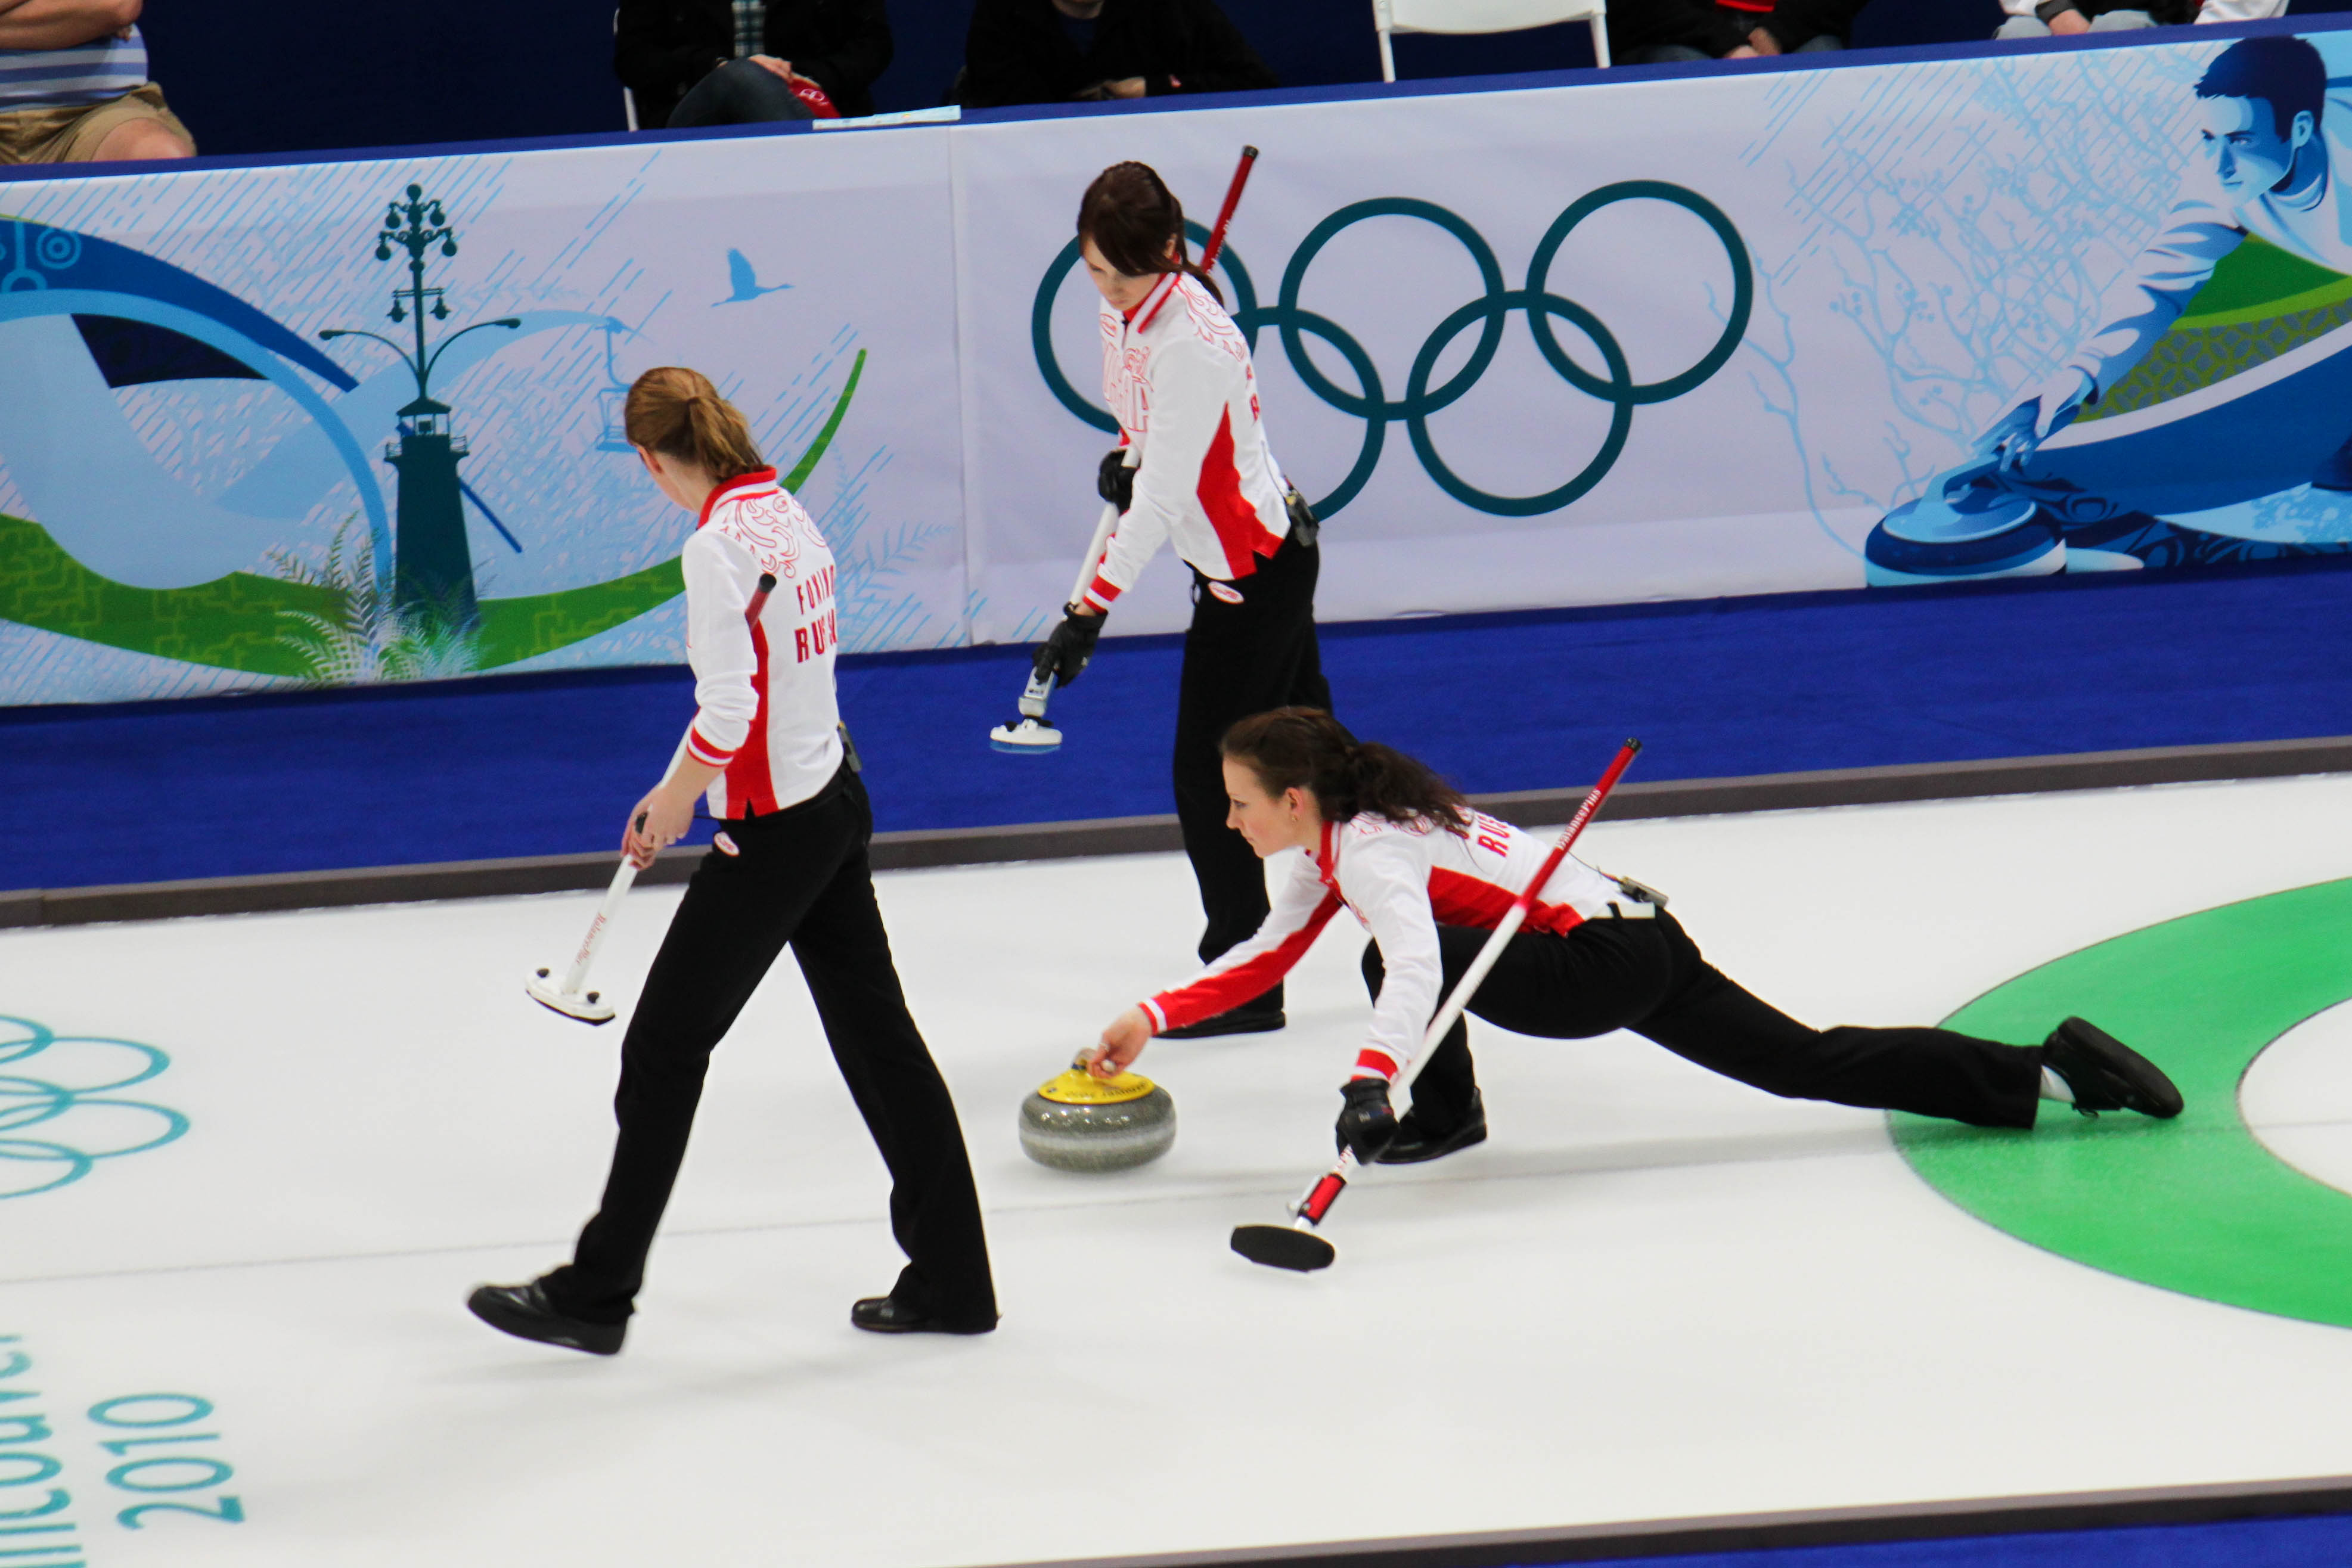 http://upload.wikimedia.org/wikipedia/commons/b/bb/Women%27s_Curling_Team_Russia_-_20_February_2010.jpg